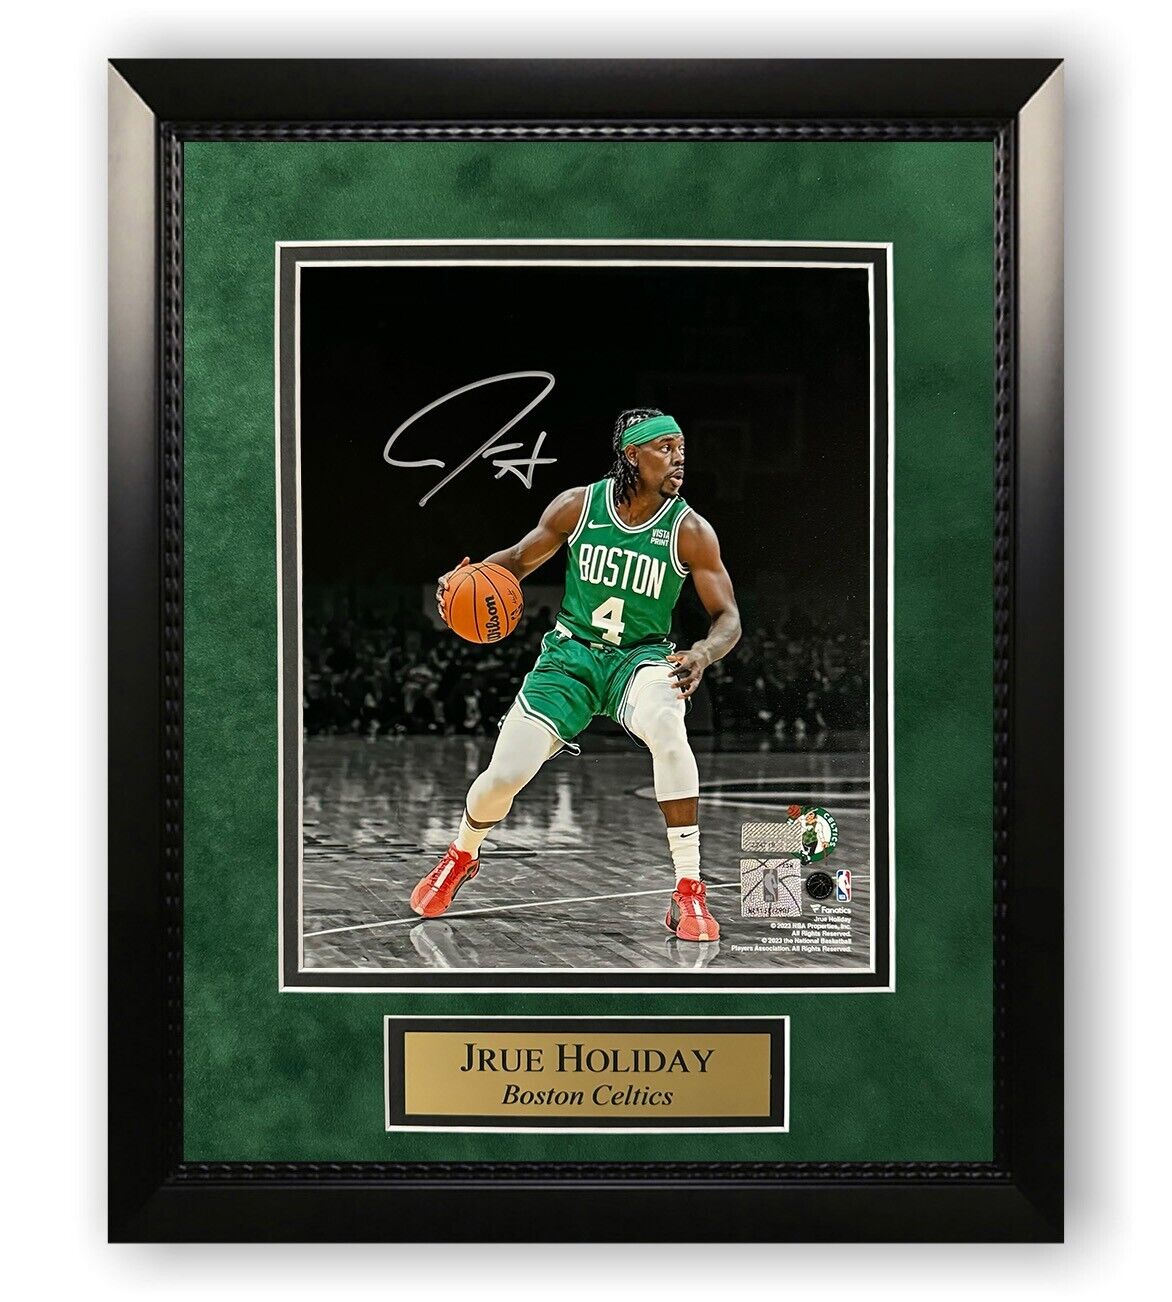 Jrue Holiday Boston Celtics Autographed Photo Framed to 11x14 NEP